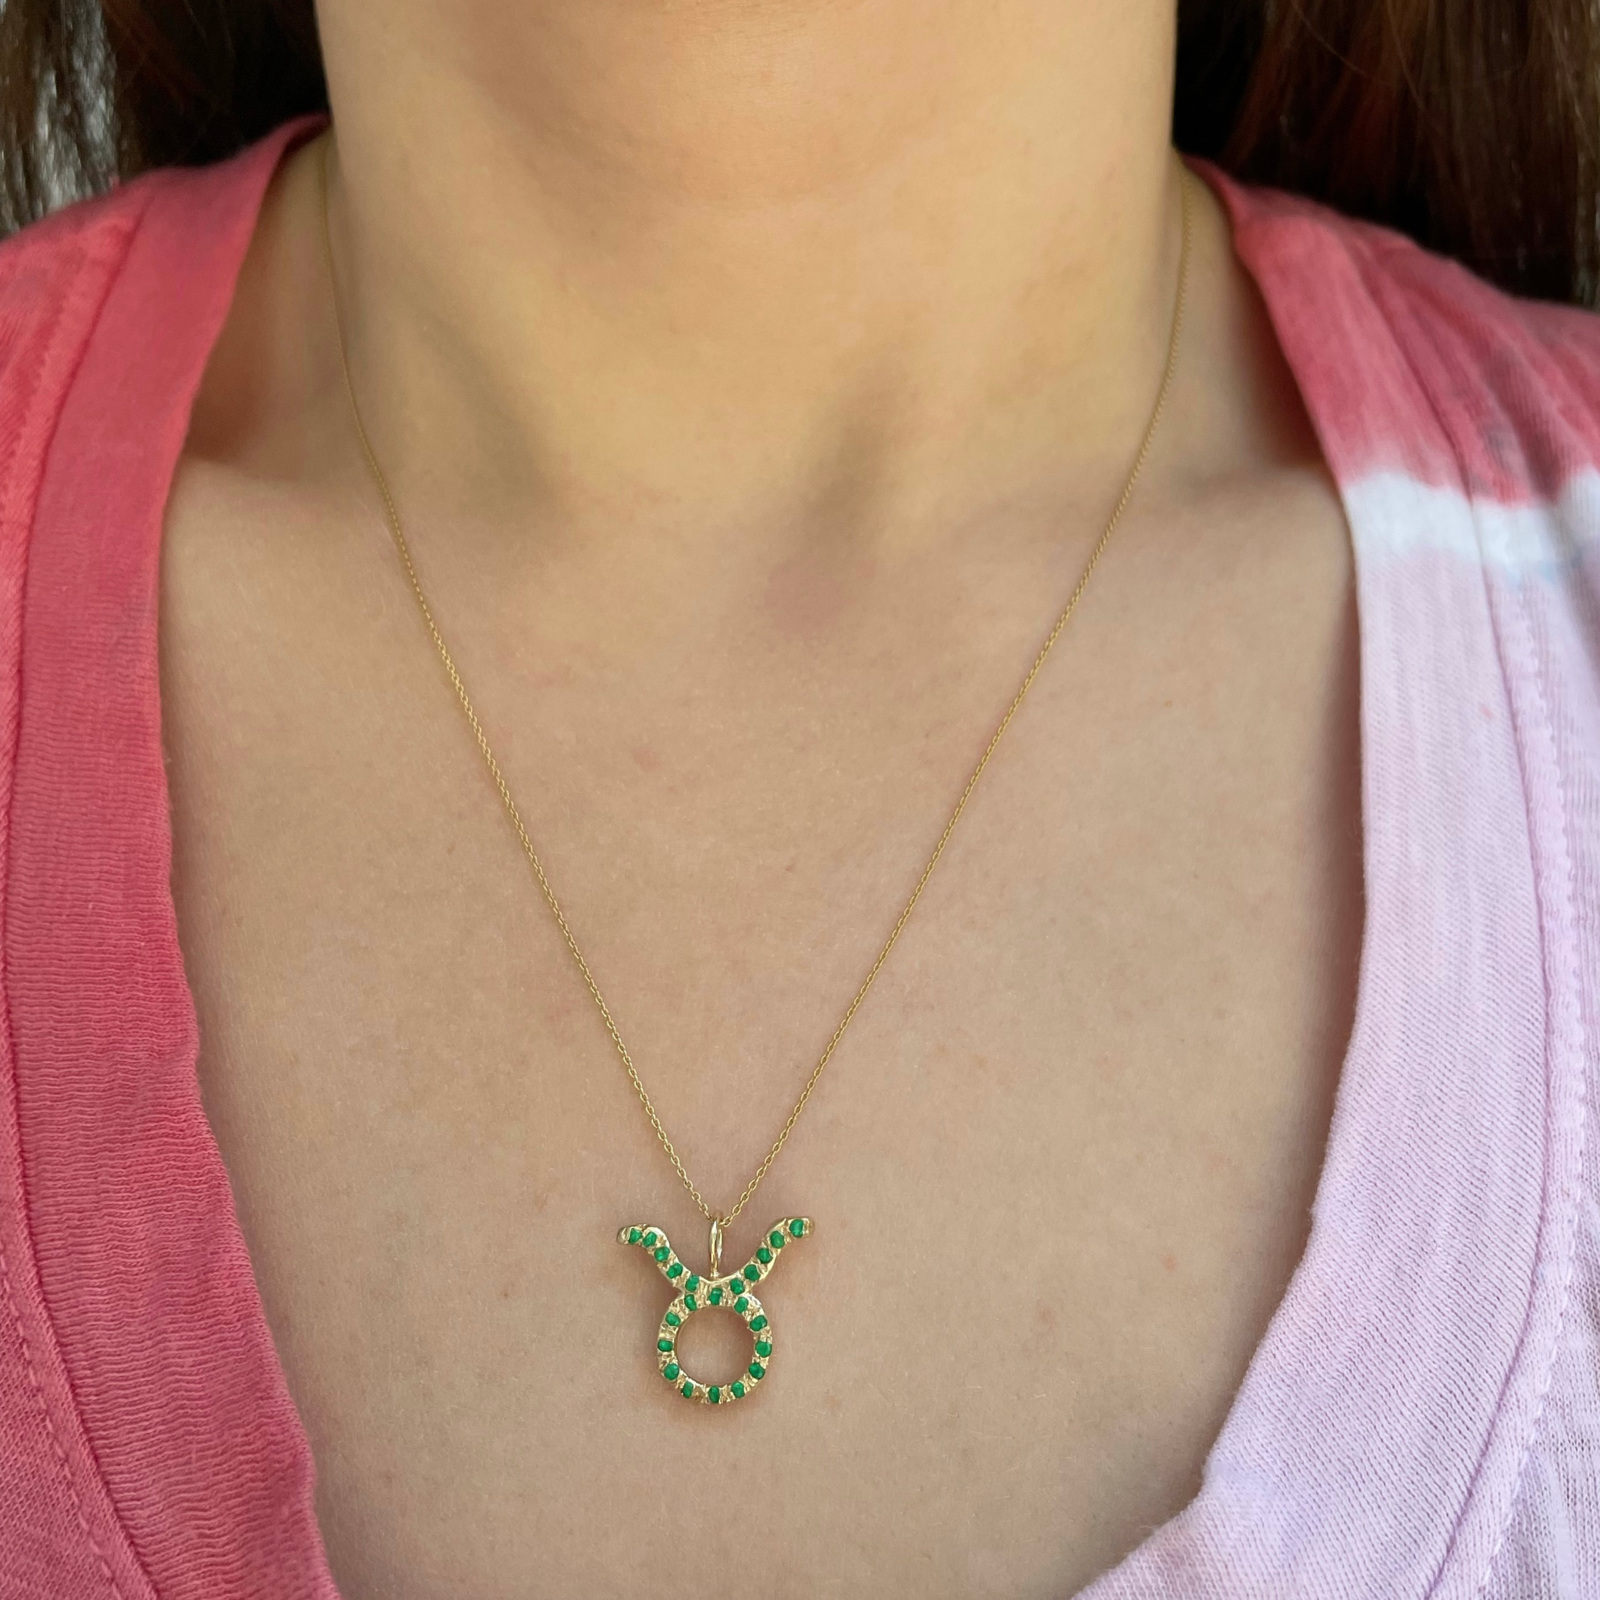 Taurus zodiac sign charm pendant necklace